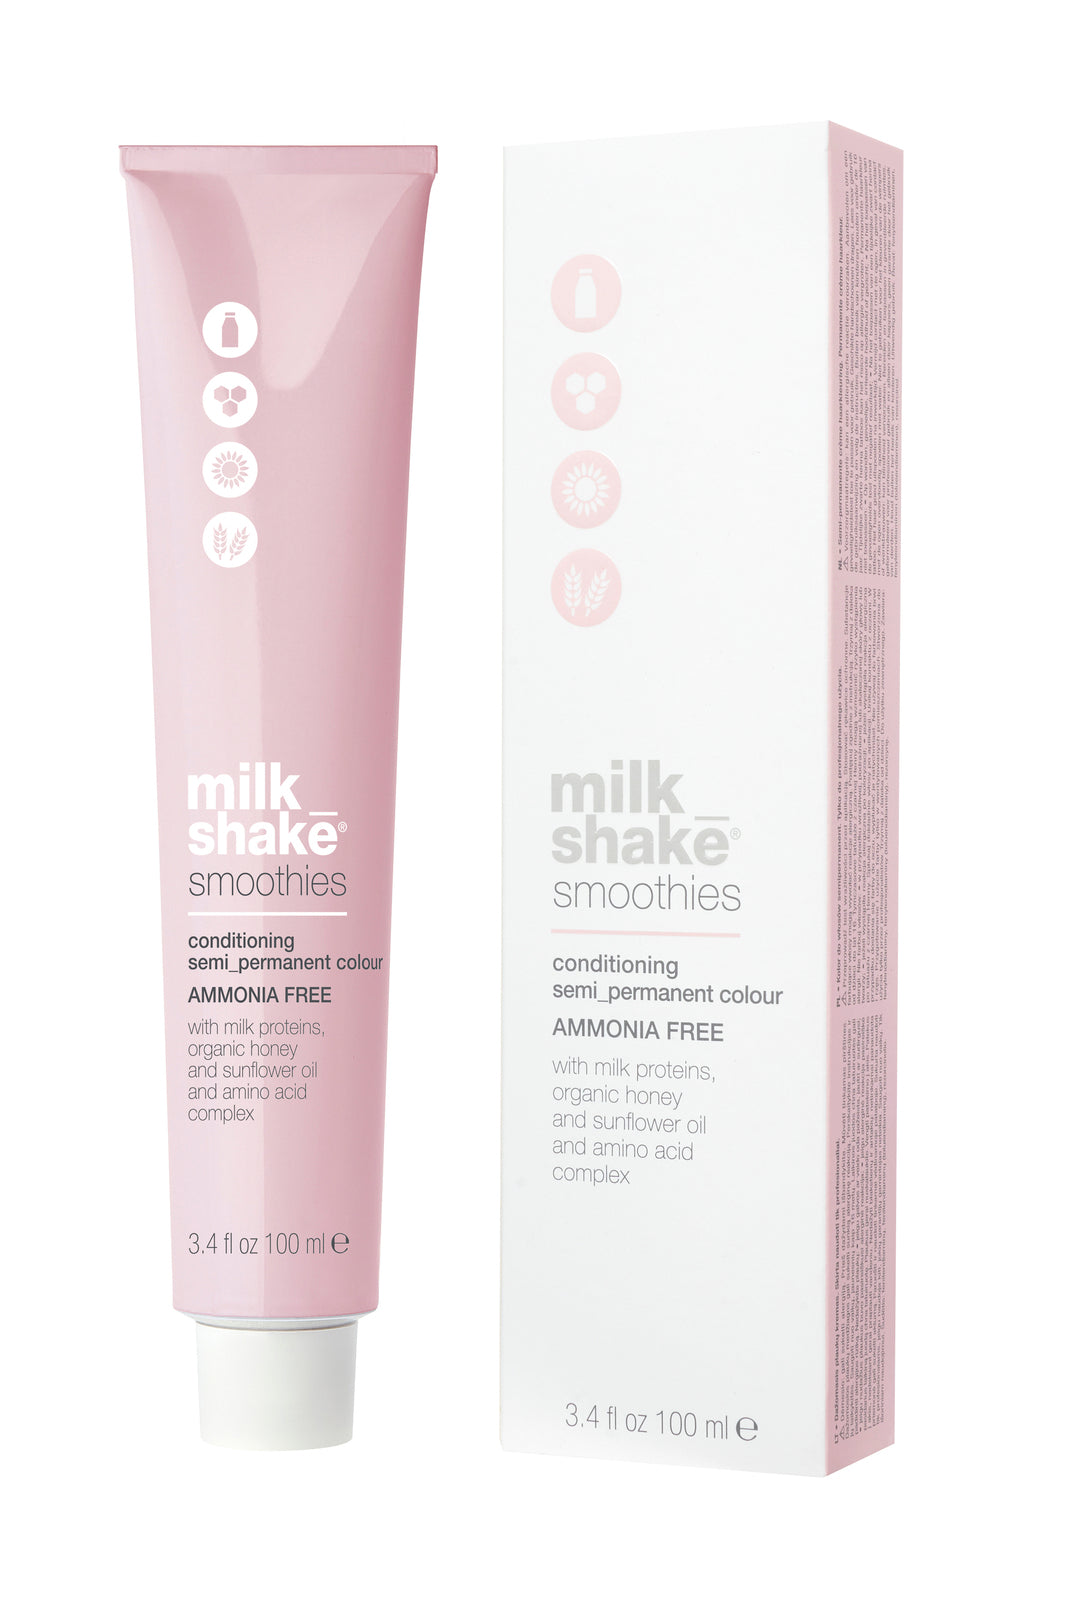 Milkshake smoothies semi-permanent color 5.1